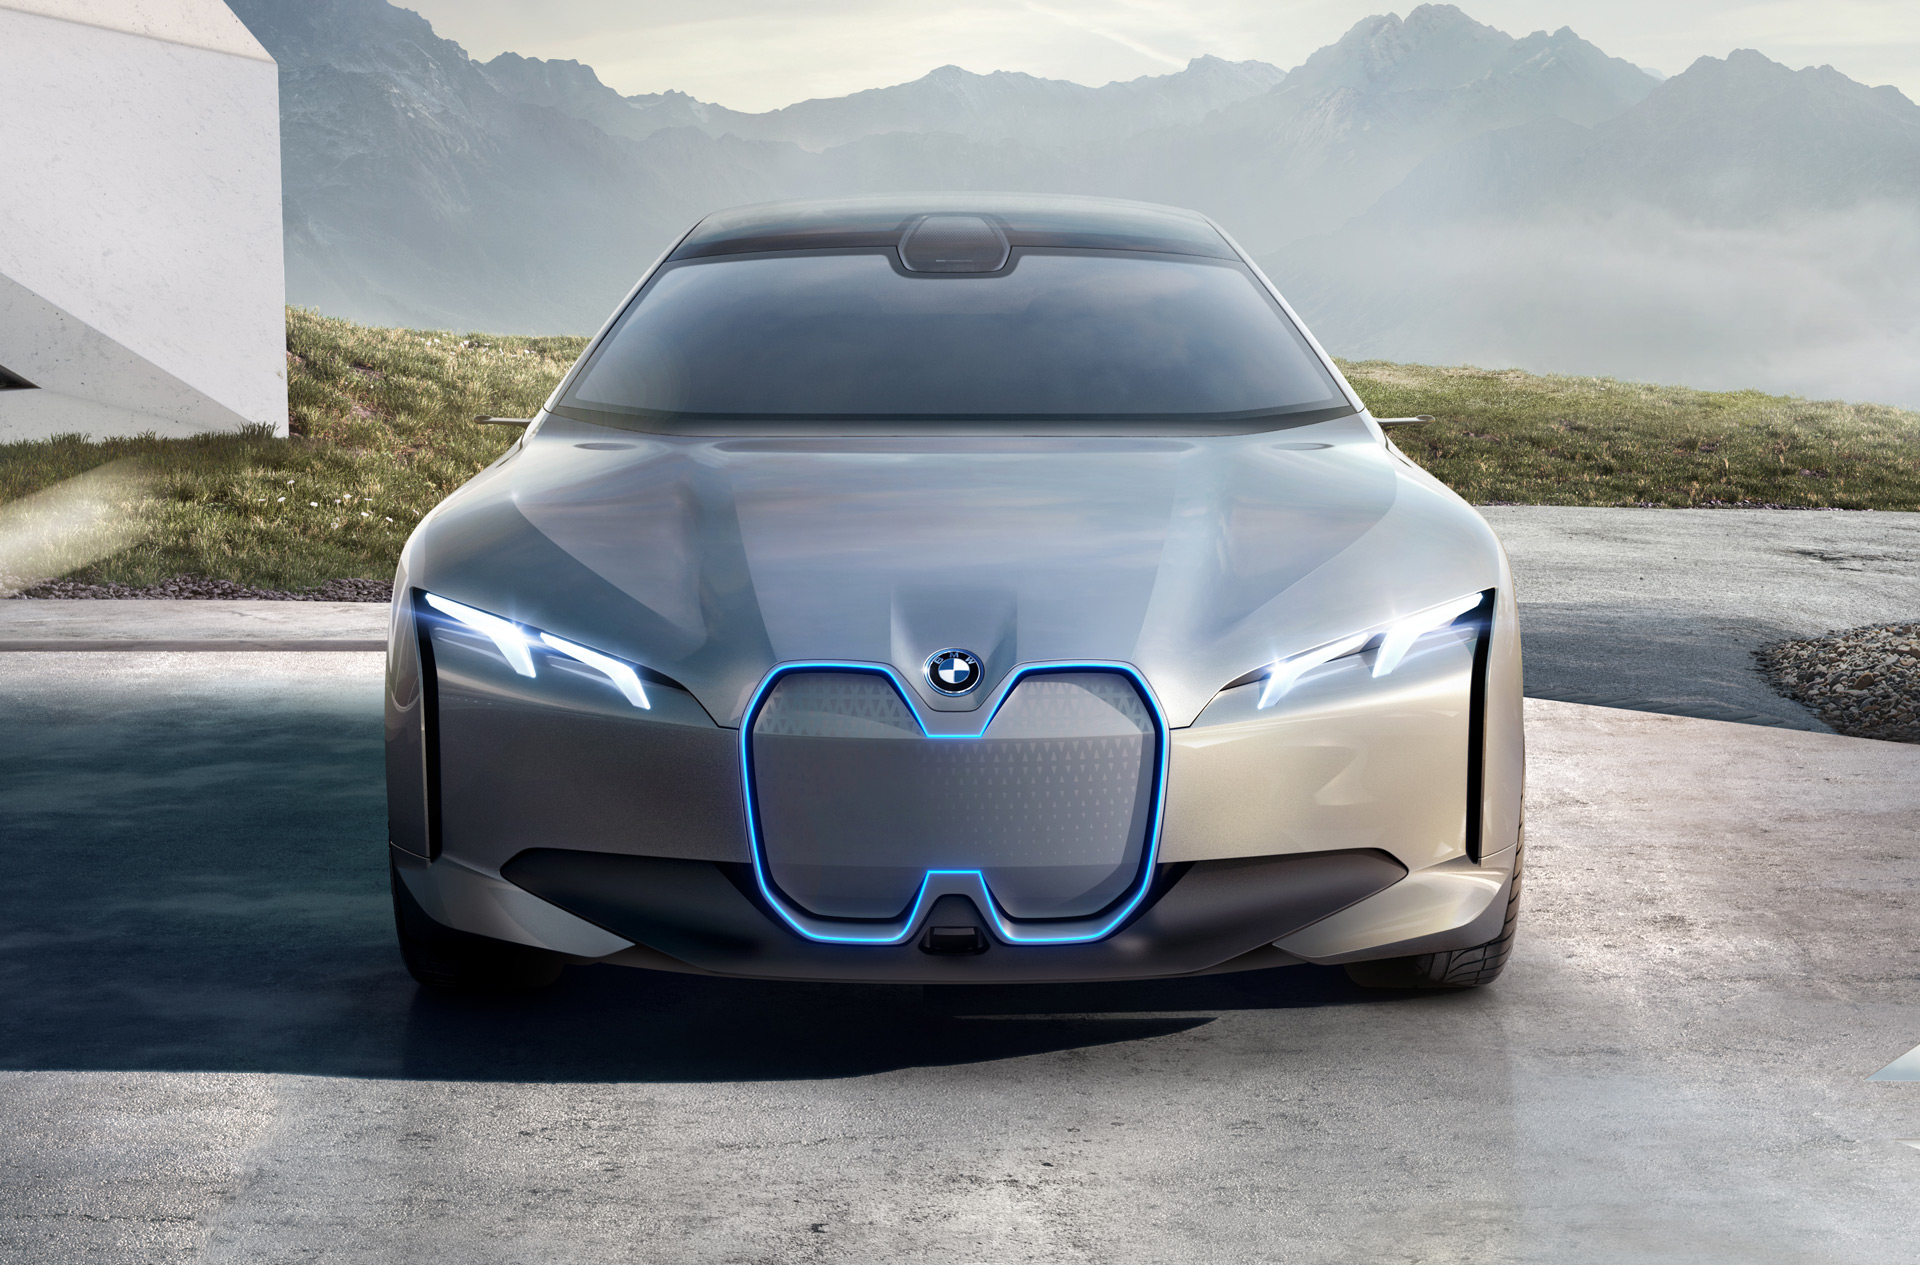 BMW i6 electric sedan in the works?